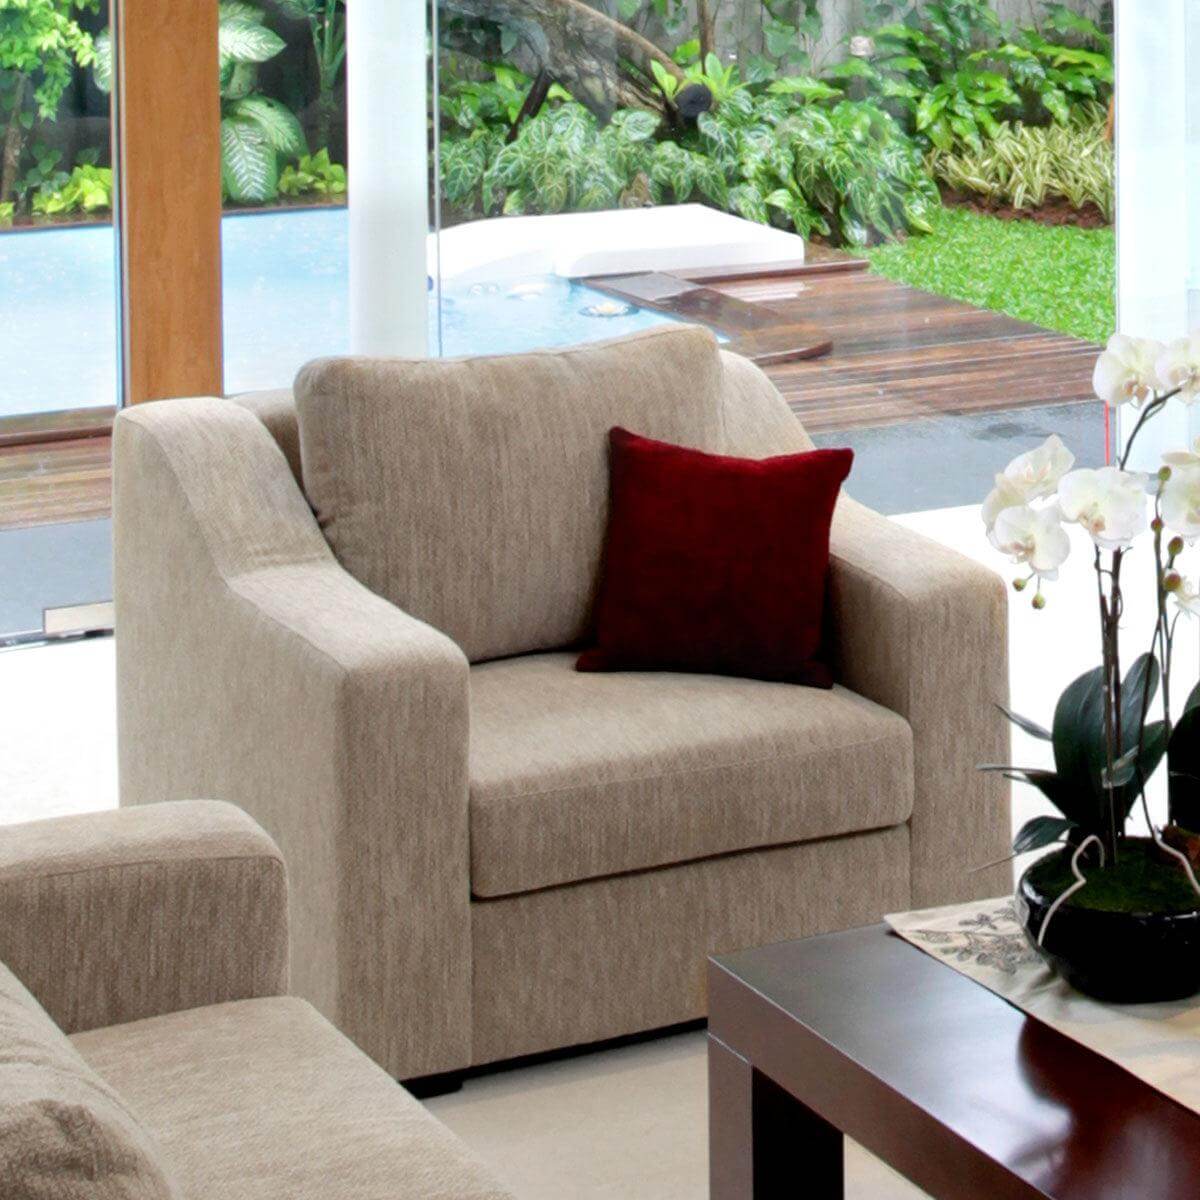 Presidio one seat sofa with prestigious accent arm furniture